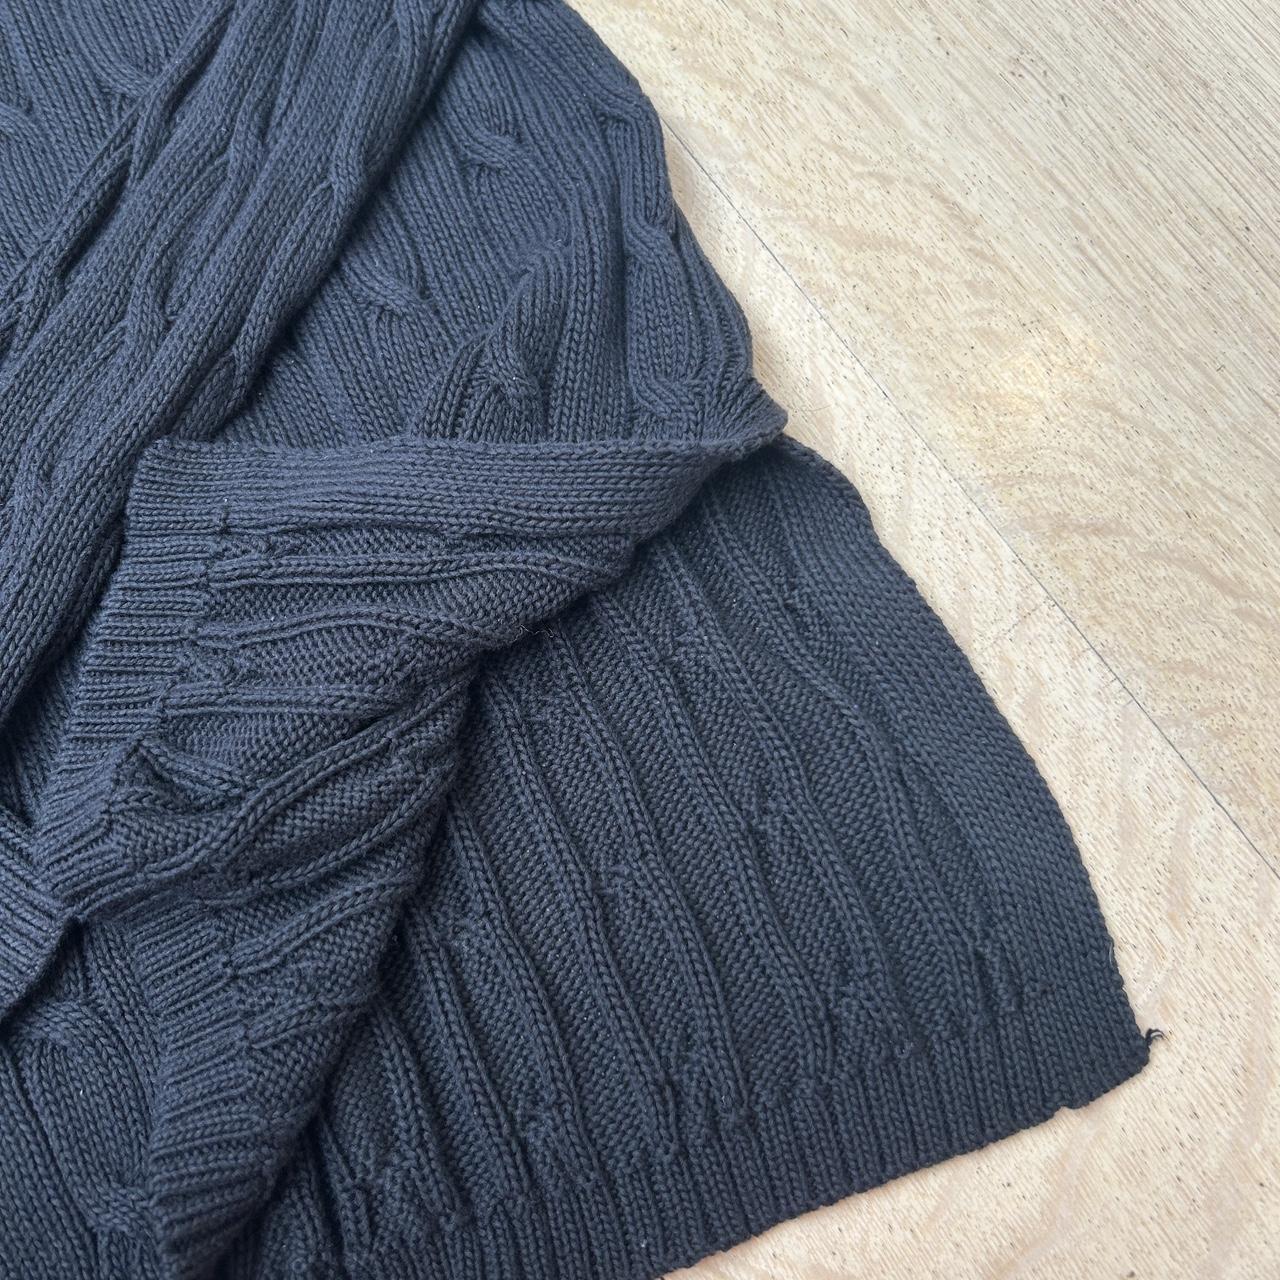 black ralph lauren cable knit jumper with side... - Depop